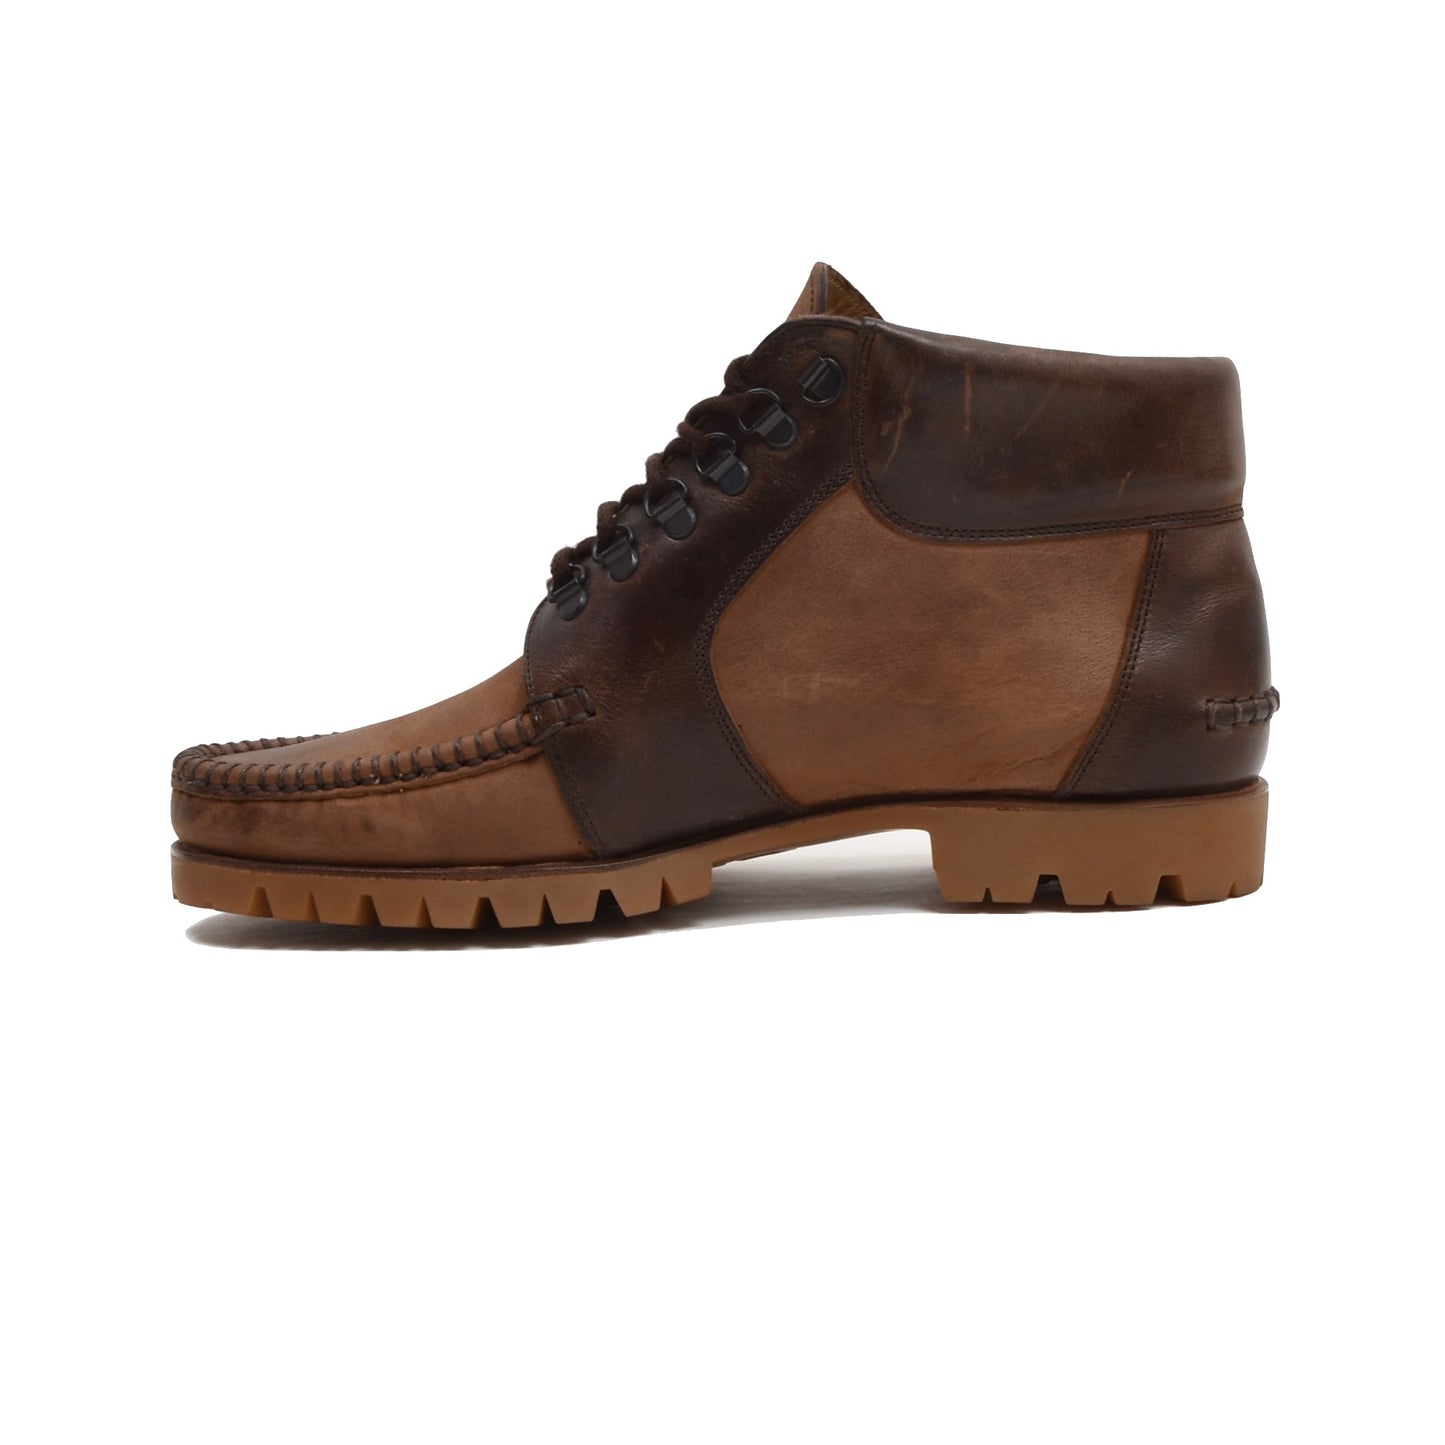 NOS Bally Switzerland Boots Size 10E - Brown